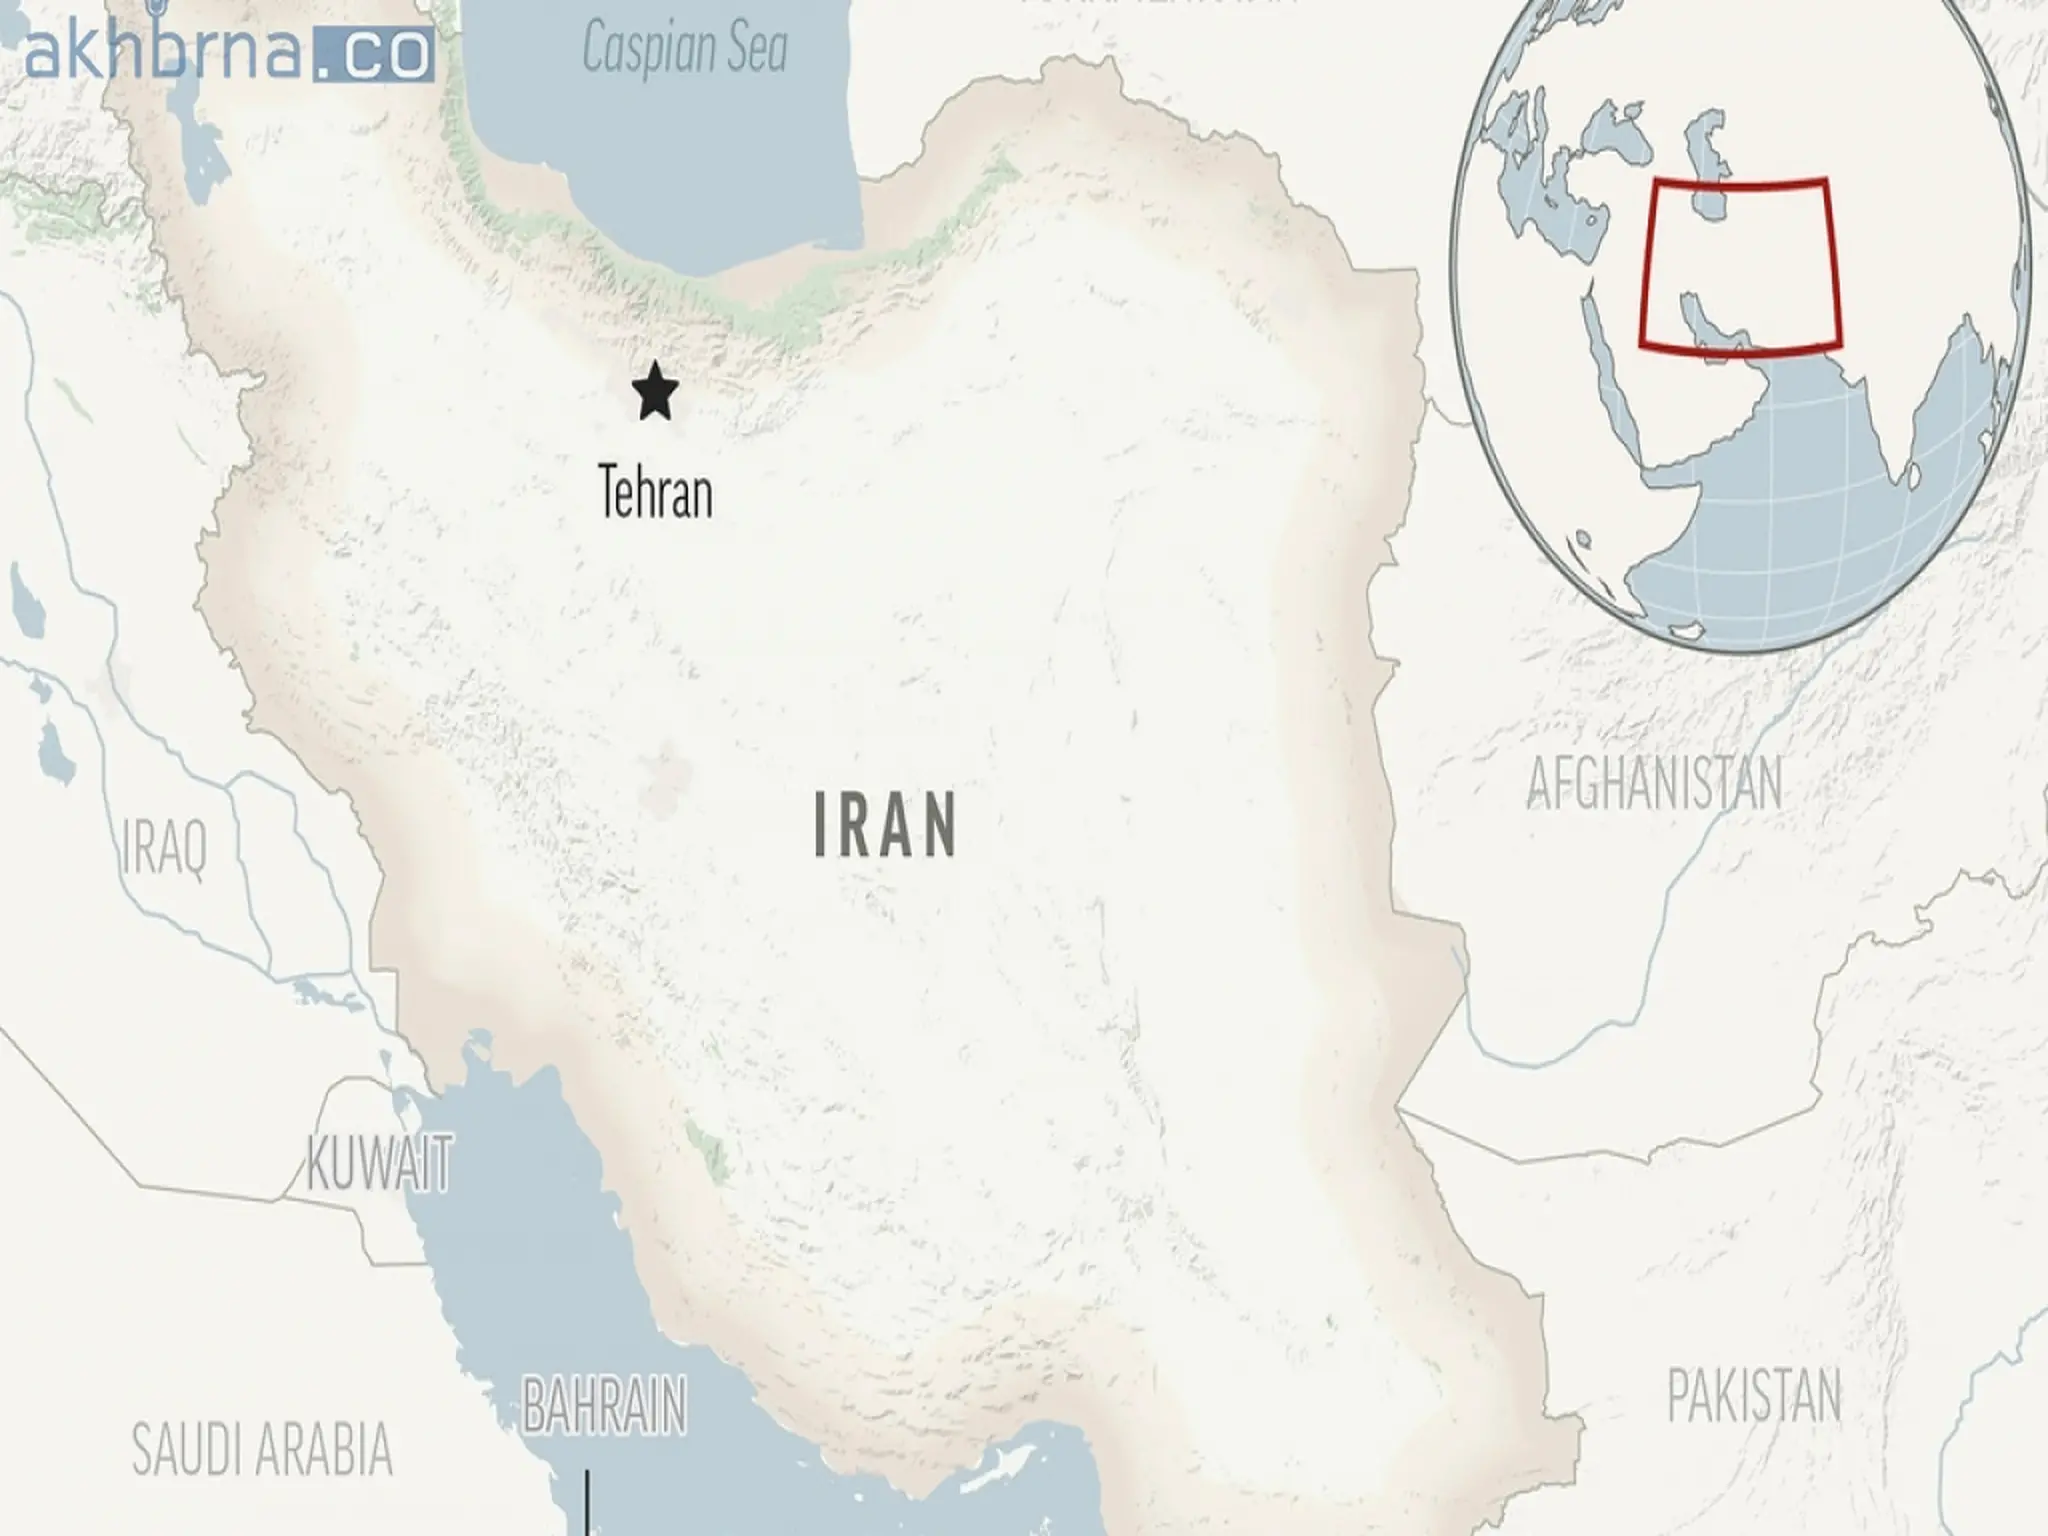 Pakistan retaliates, launching strikes into Iranian territory